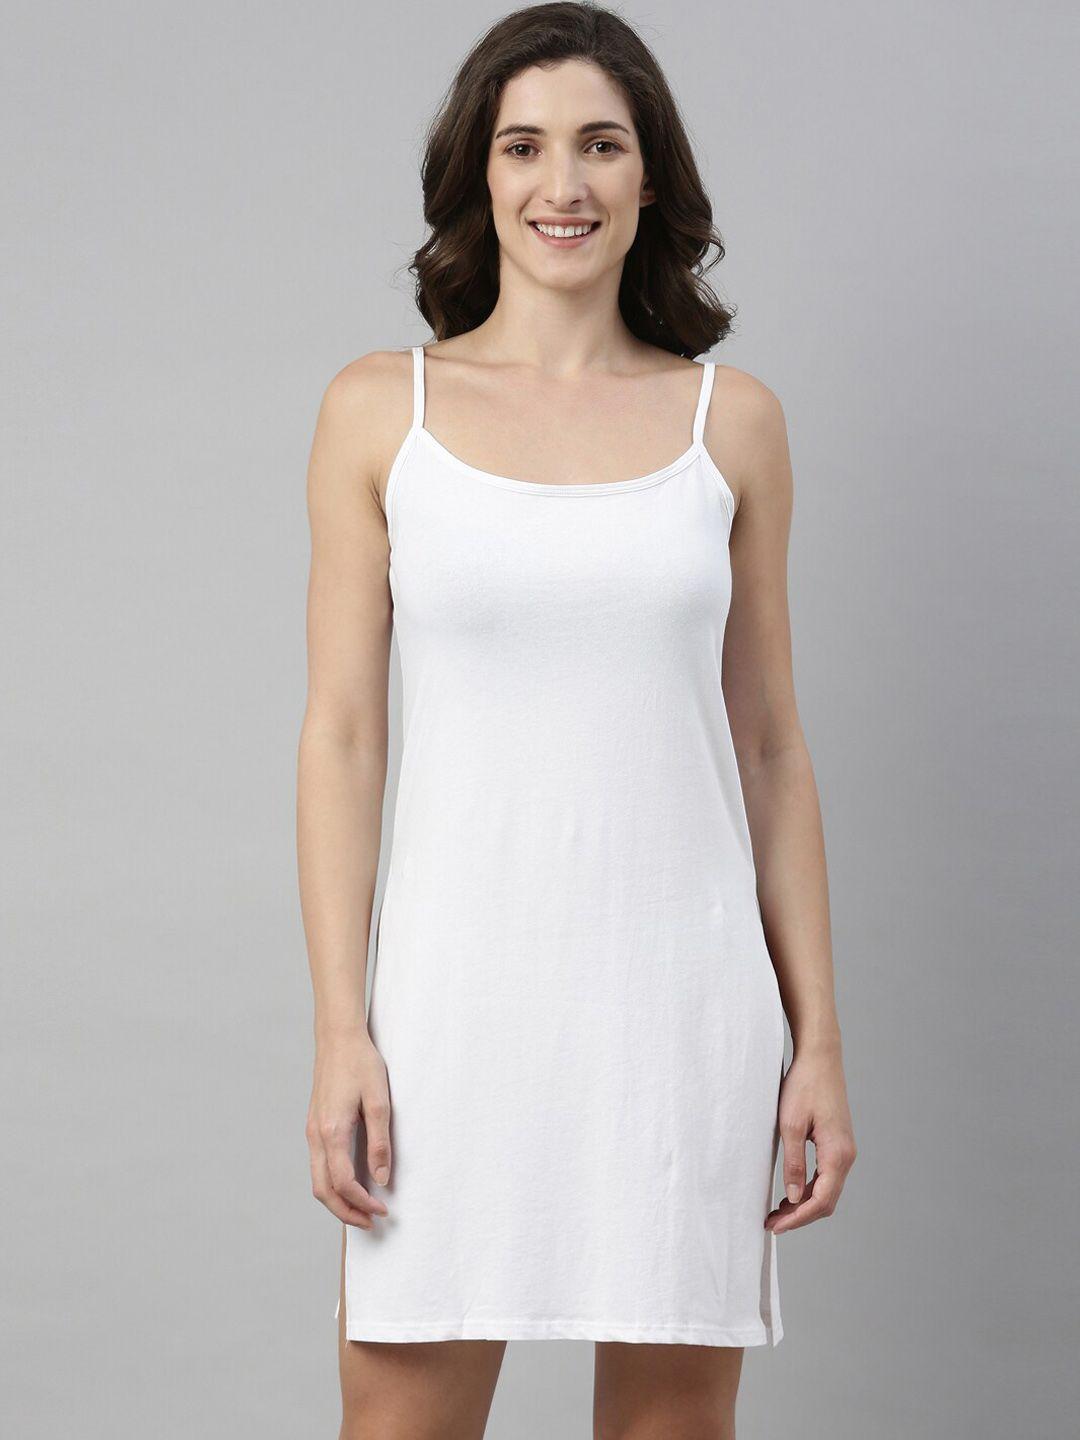 enamor women white solid camisole dress